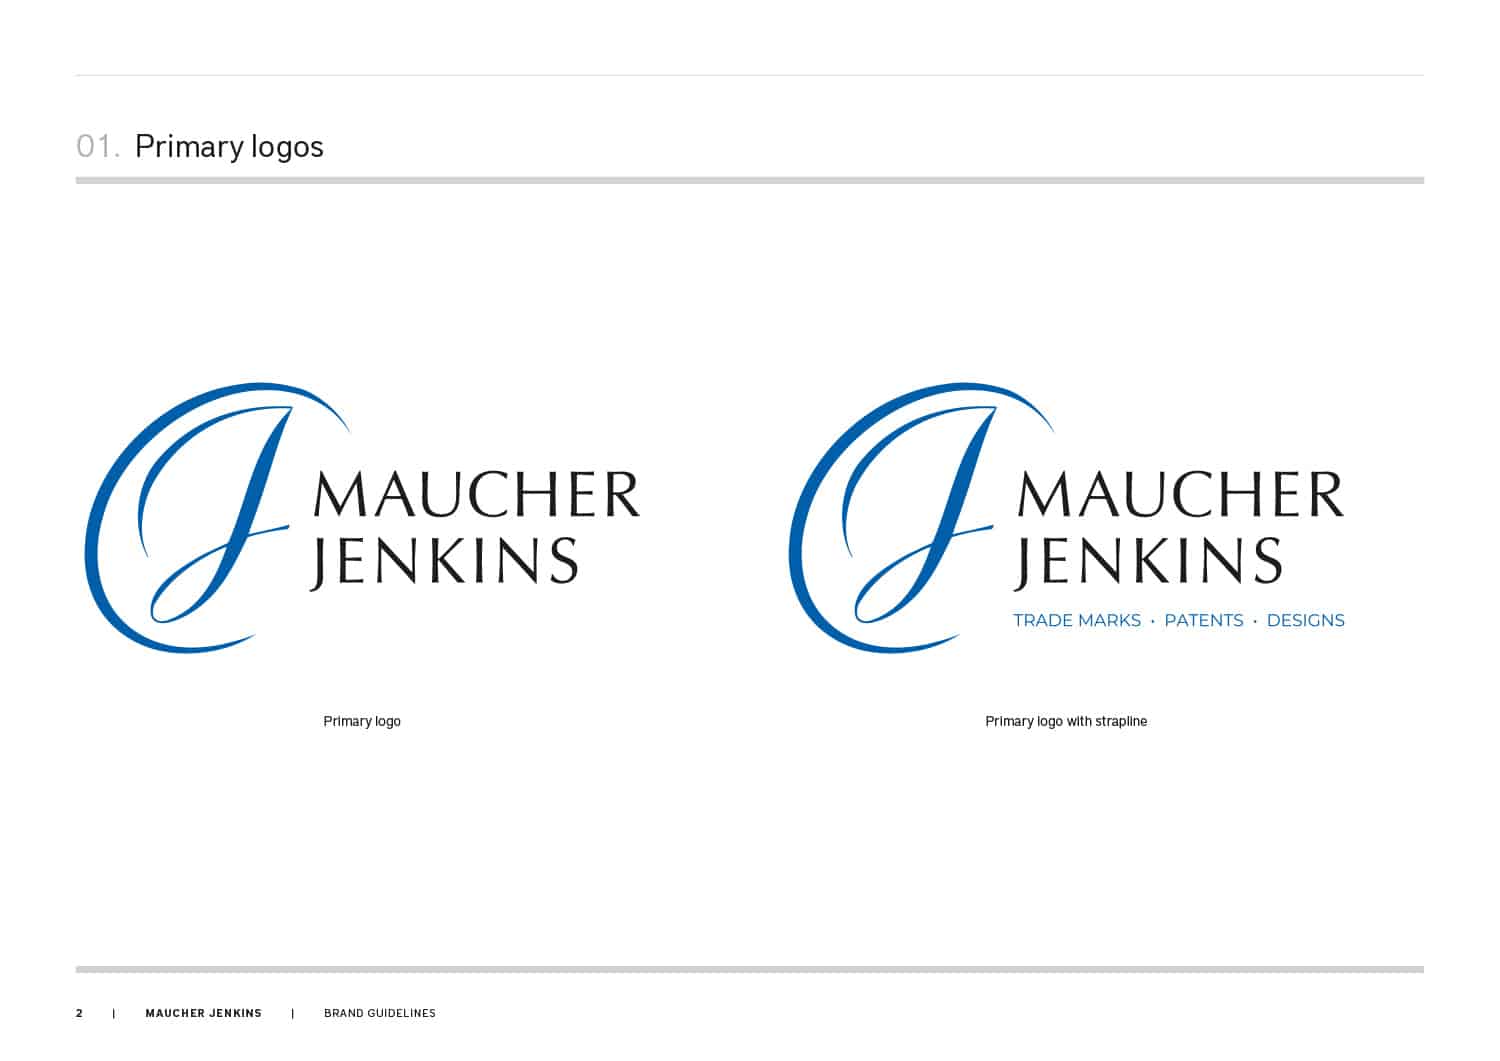 Maucher Jenkins brand identity guidelines